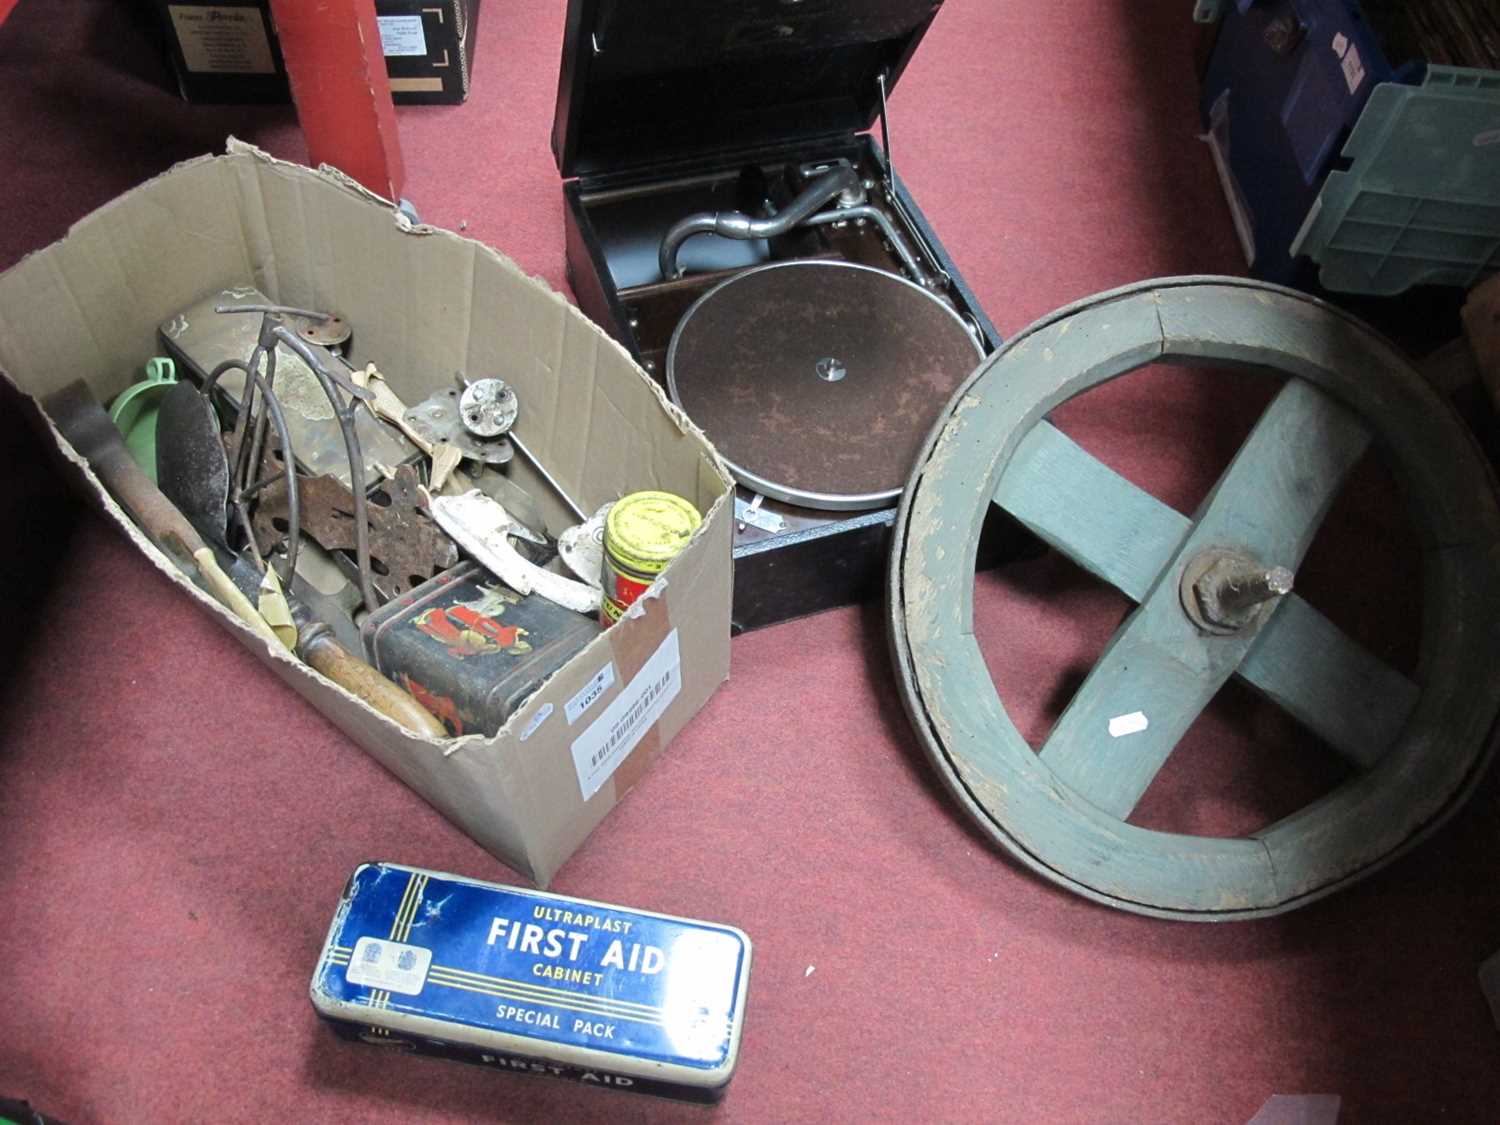 HMV 78prm Record Player, old cart wheel, box of items including sheep shears, tins etc.